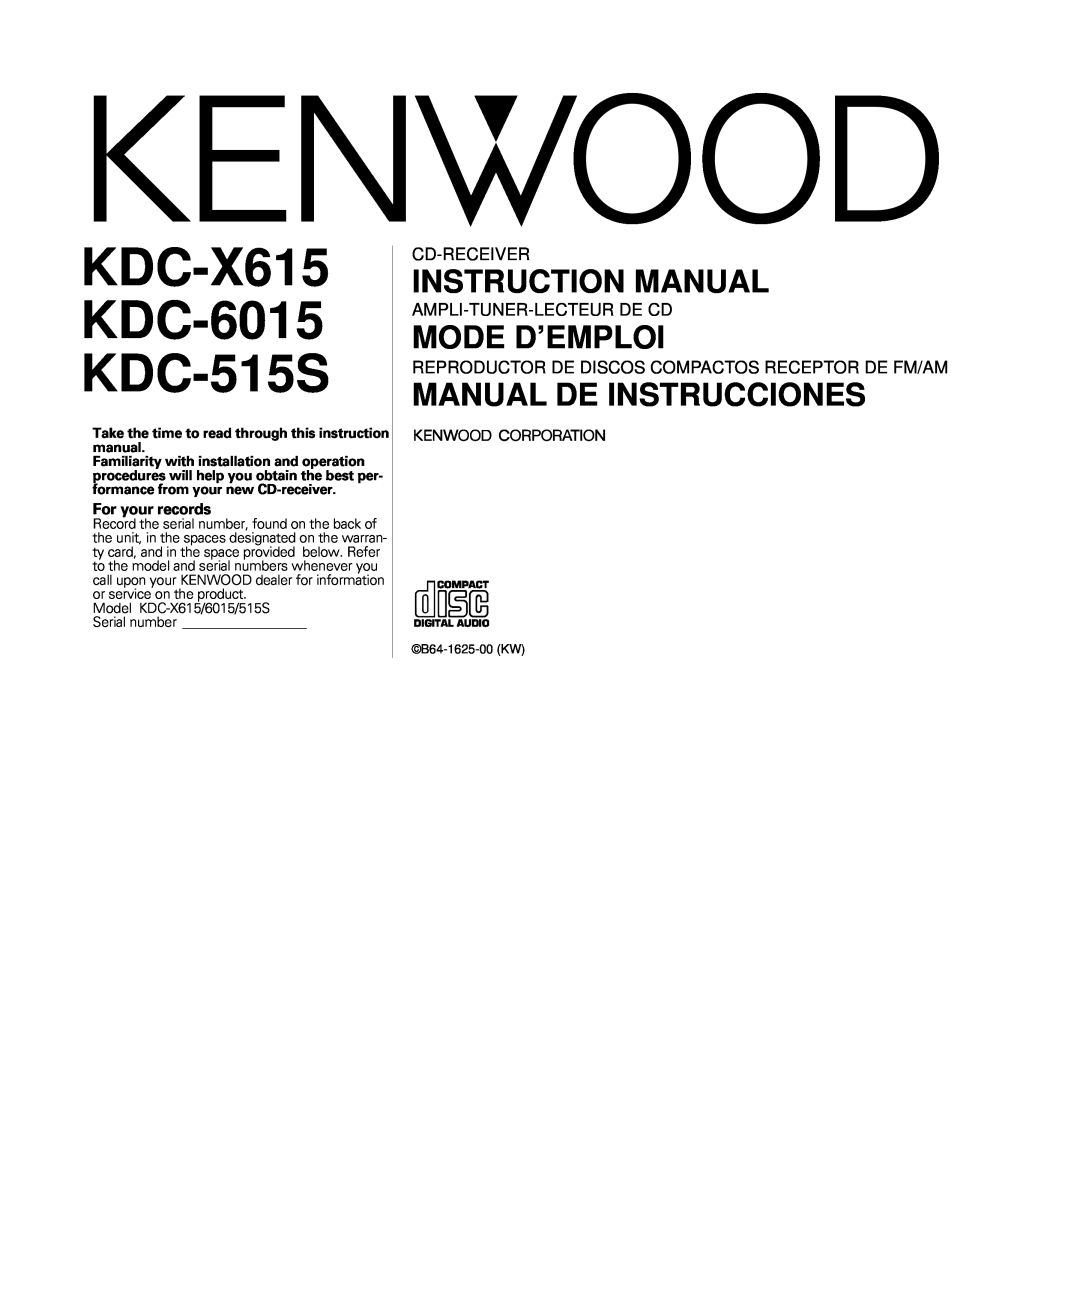 Kenwood instruction manual Cd-Receiver, Ampli-Tuner-Lecteurde Cd, For your records, KDC-X615 KDC-6015 KDC-515S 